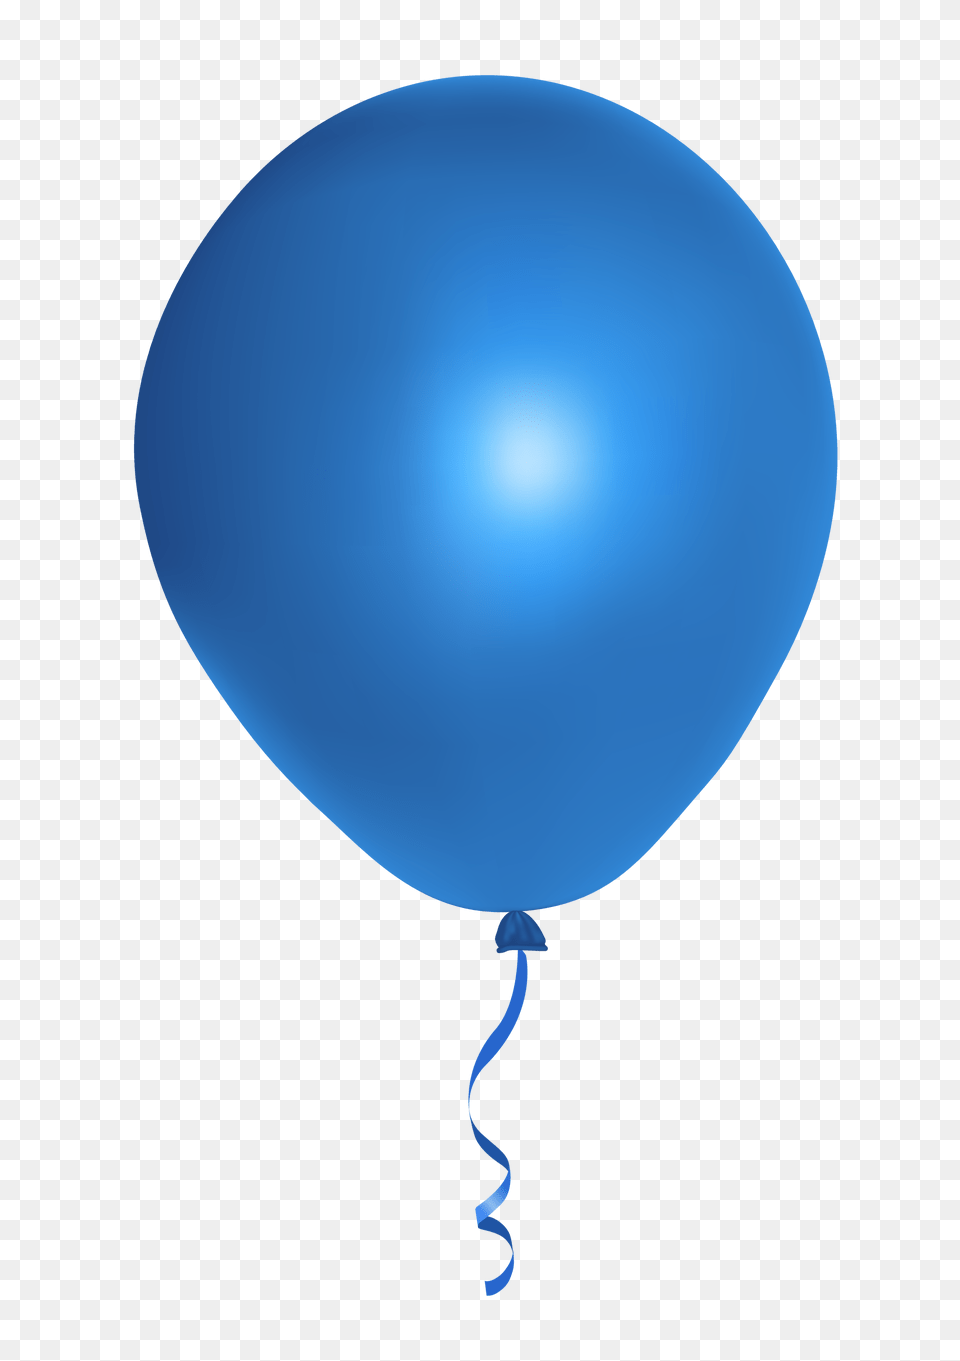 Pngpix Com Blue Balloon Image Free Png Download